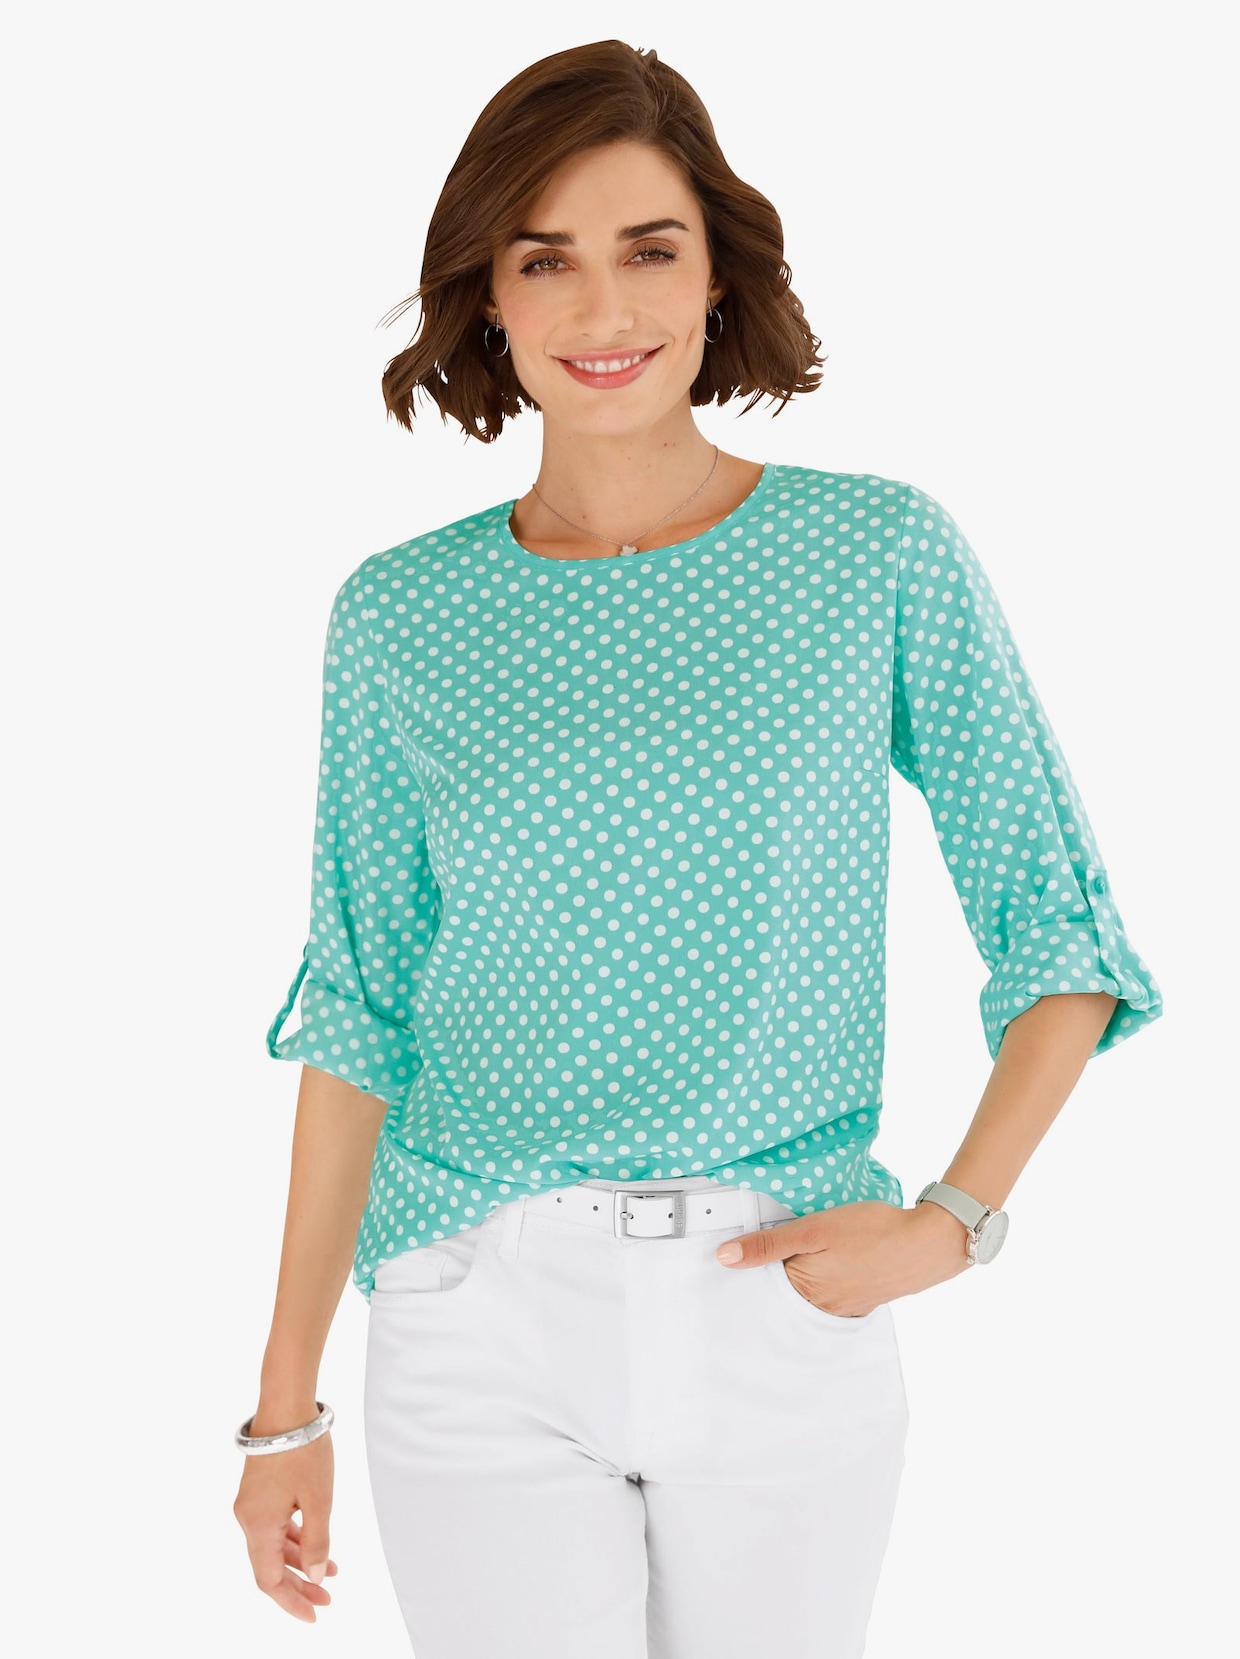 Comfortabele blouse - blauwgroen/wit gestippeld